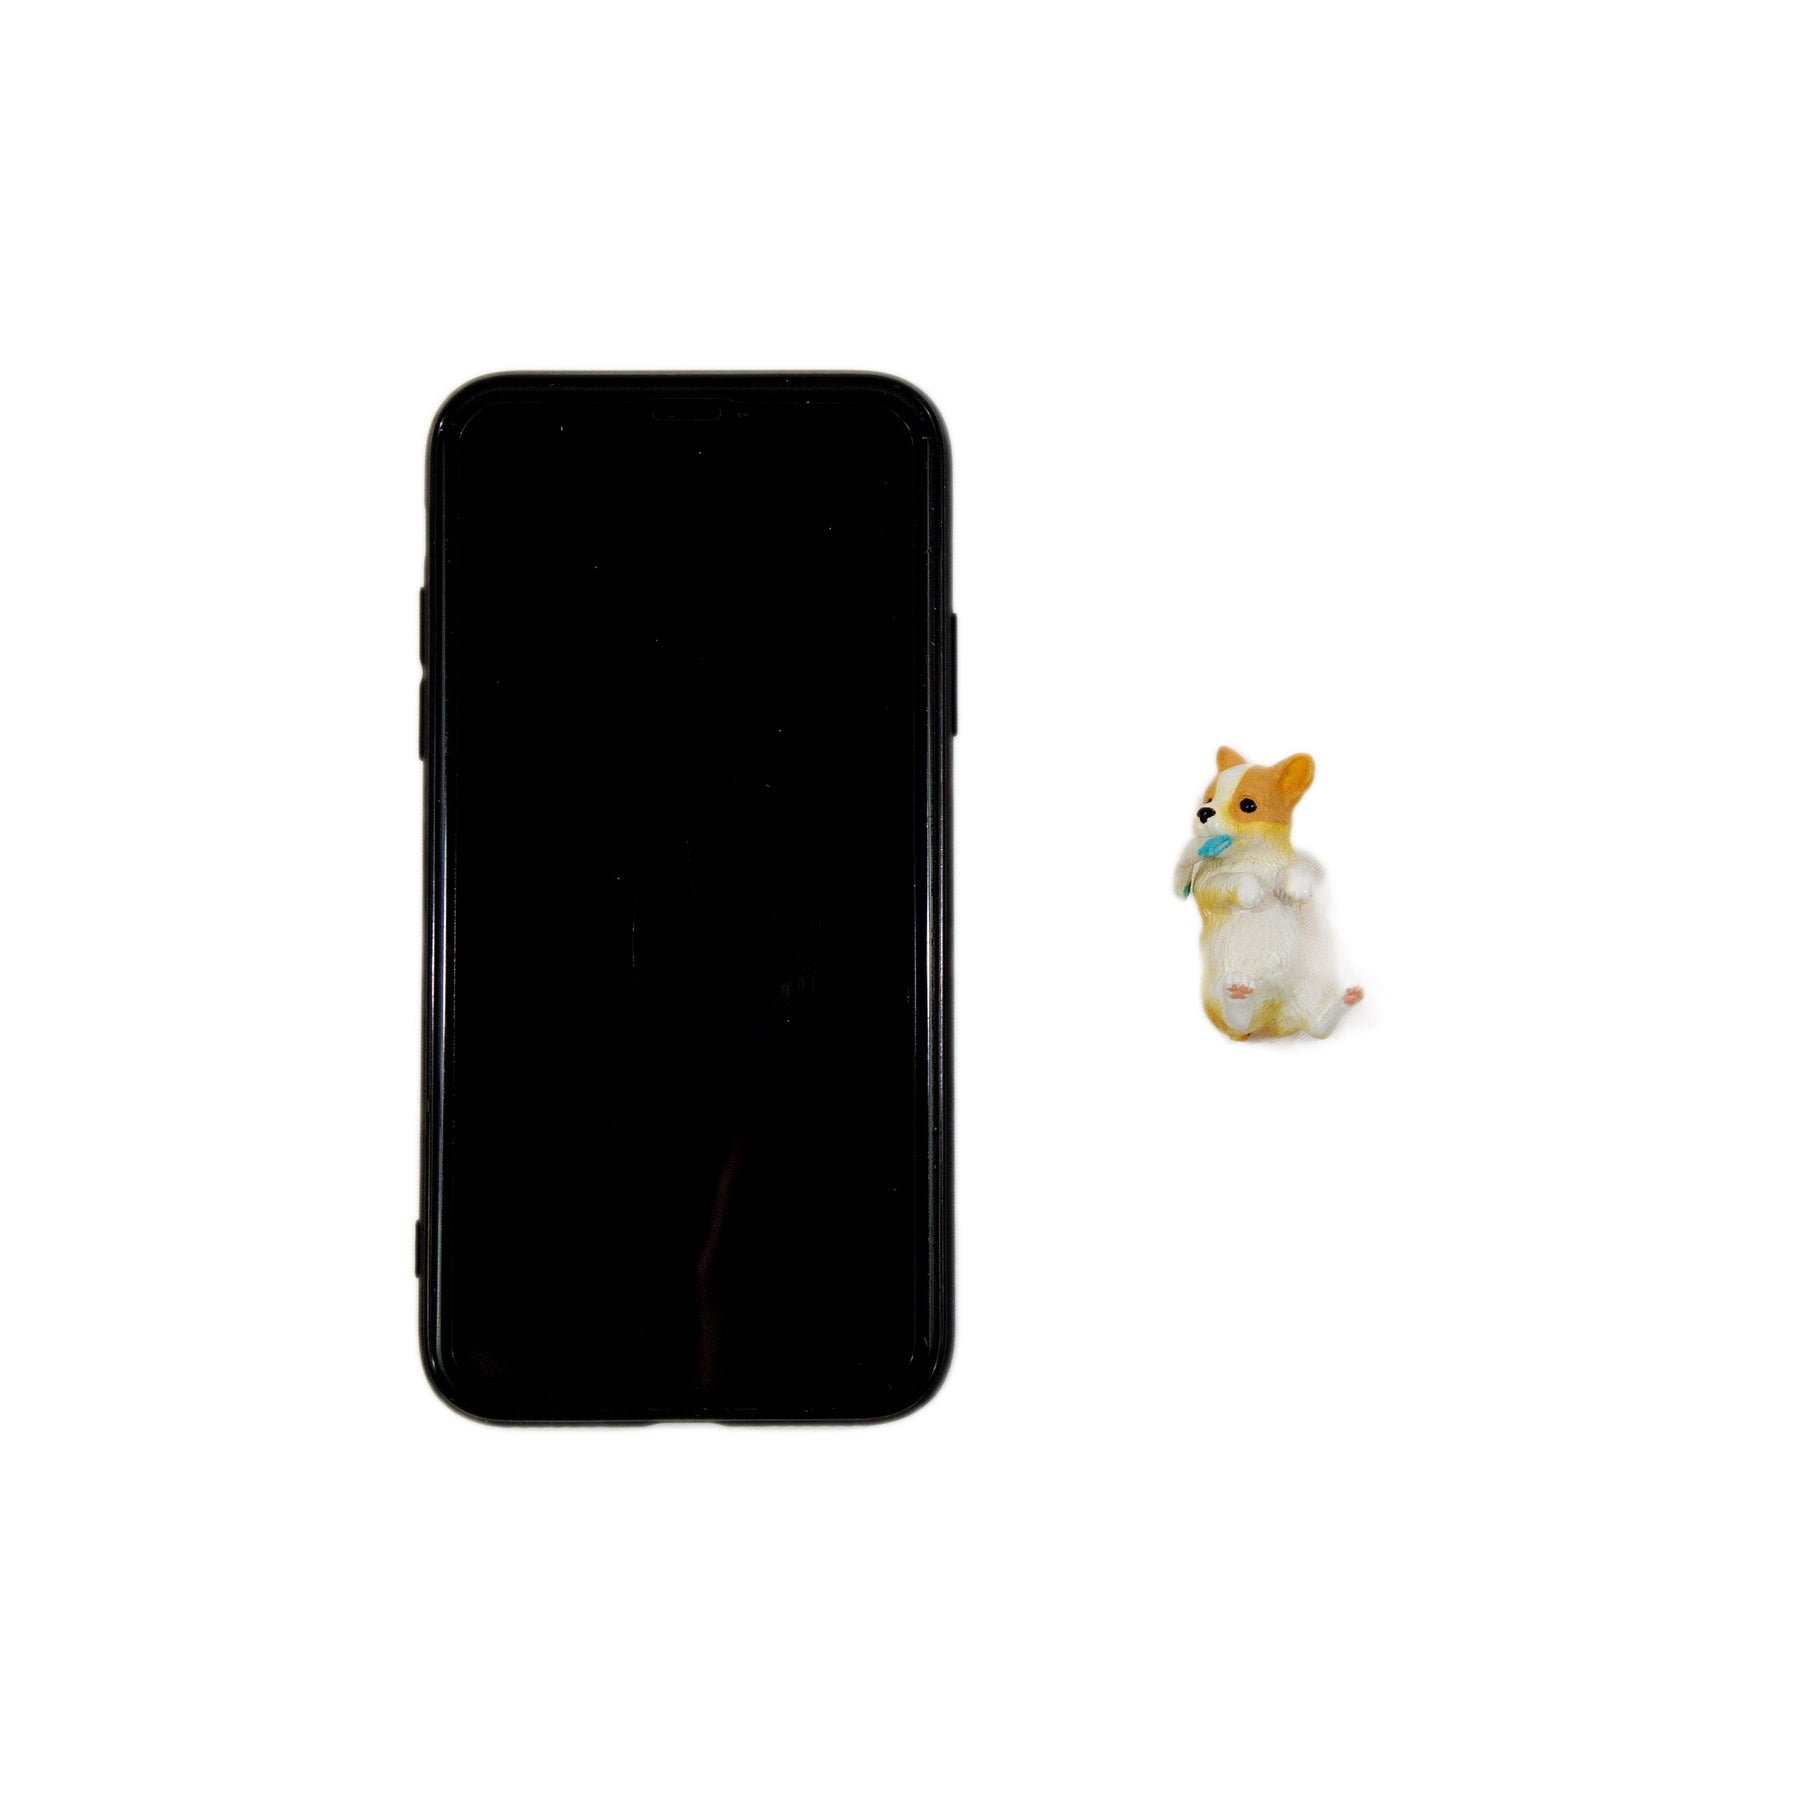 Corgi Miniature next to cellphone for size comparison